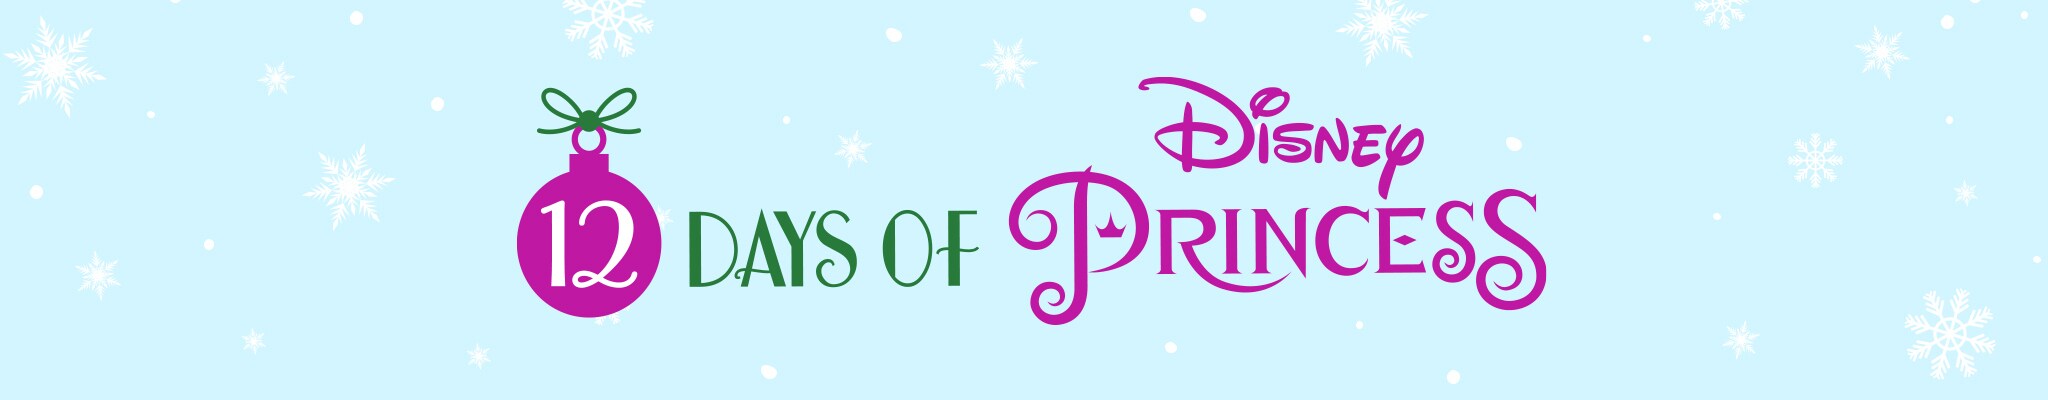 12 Days of Disney Princess